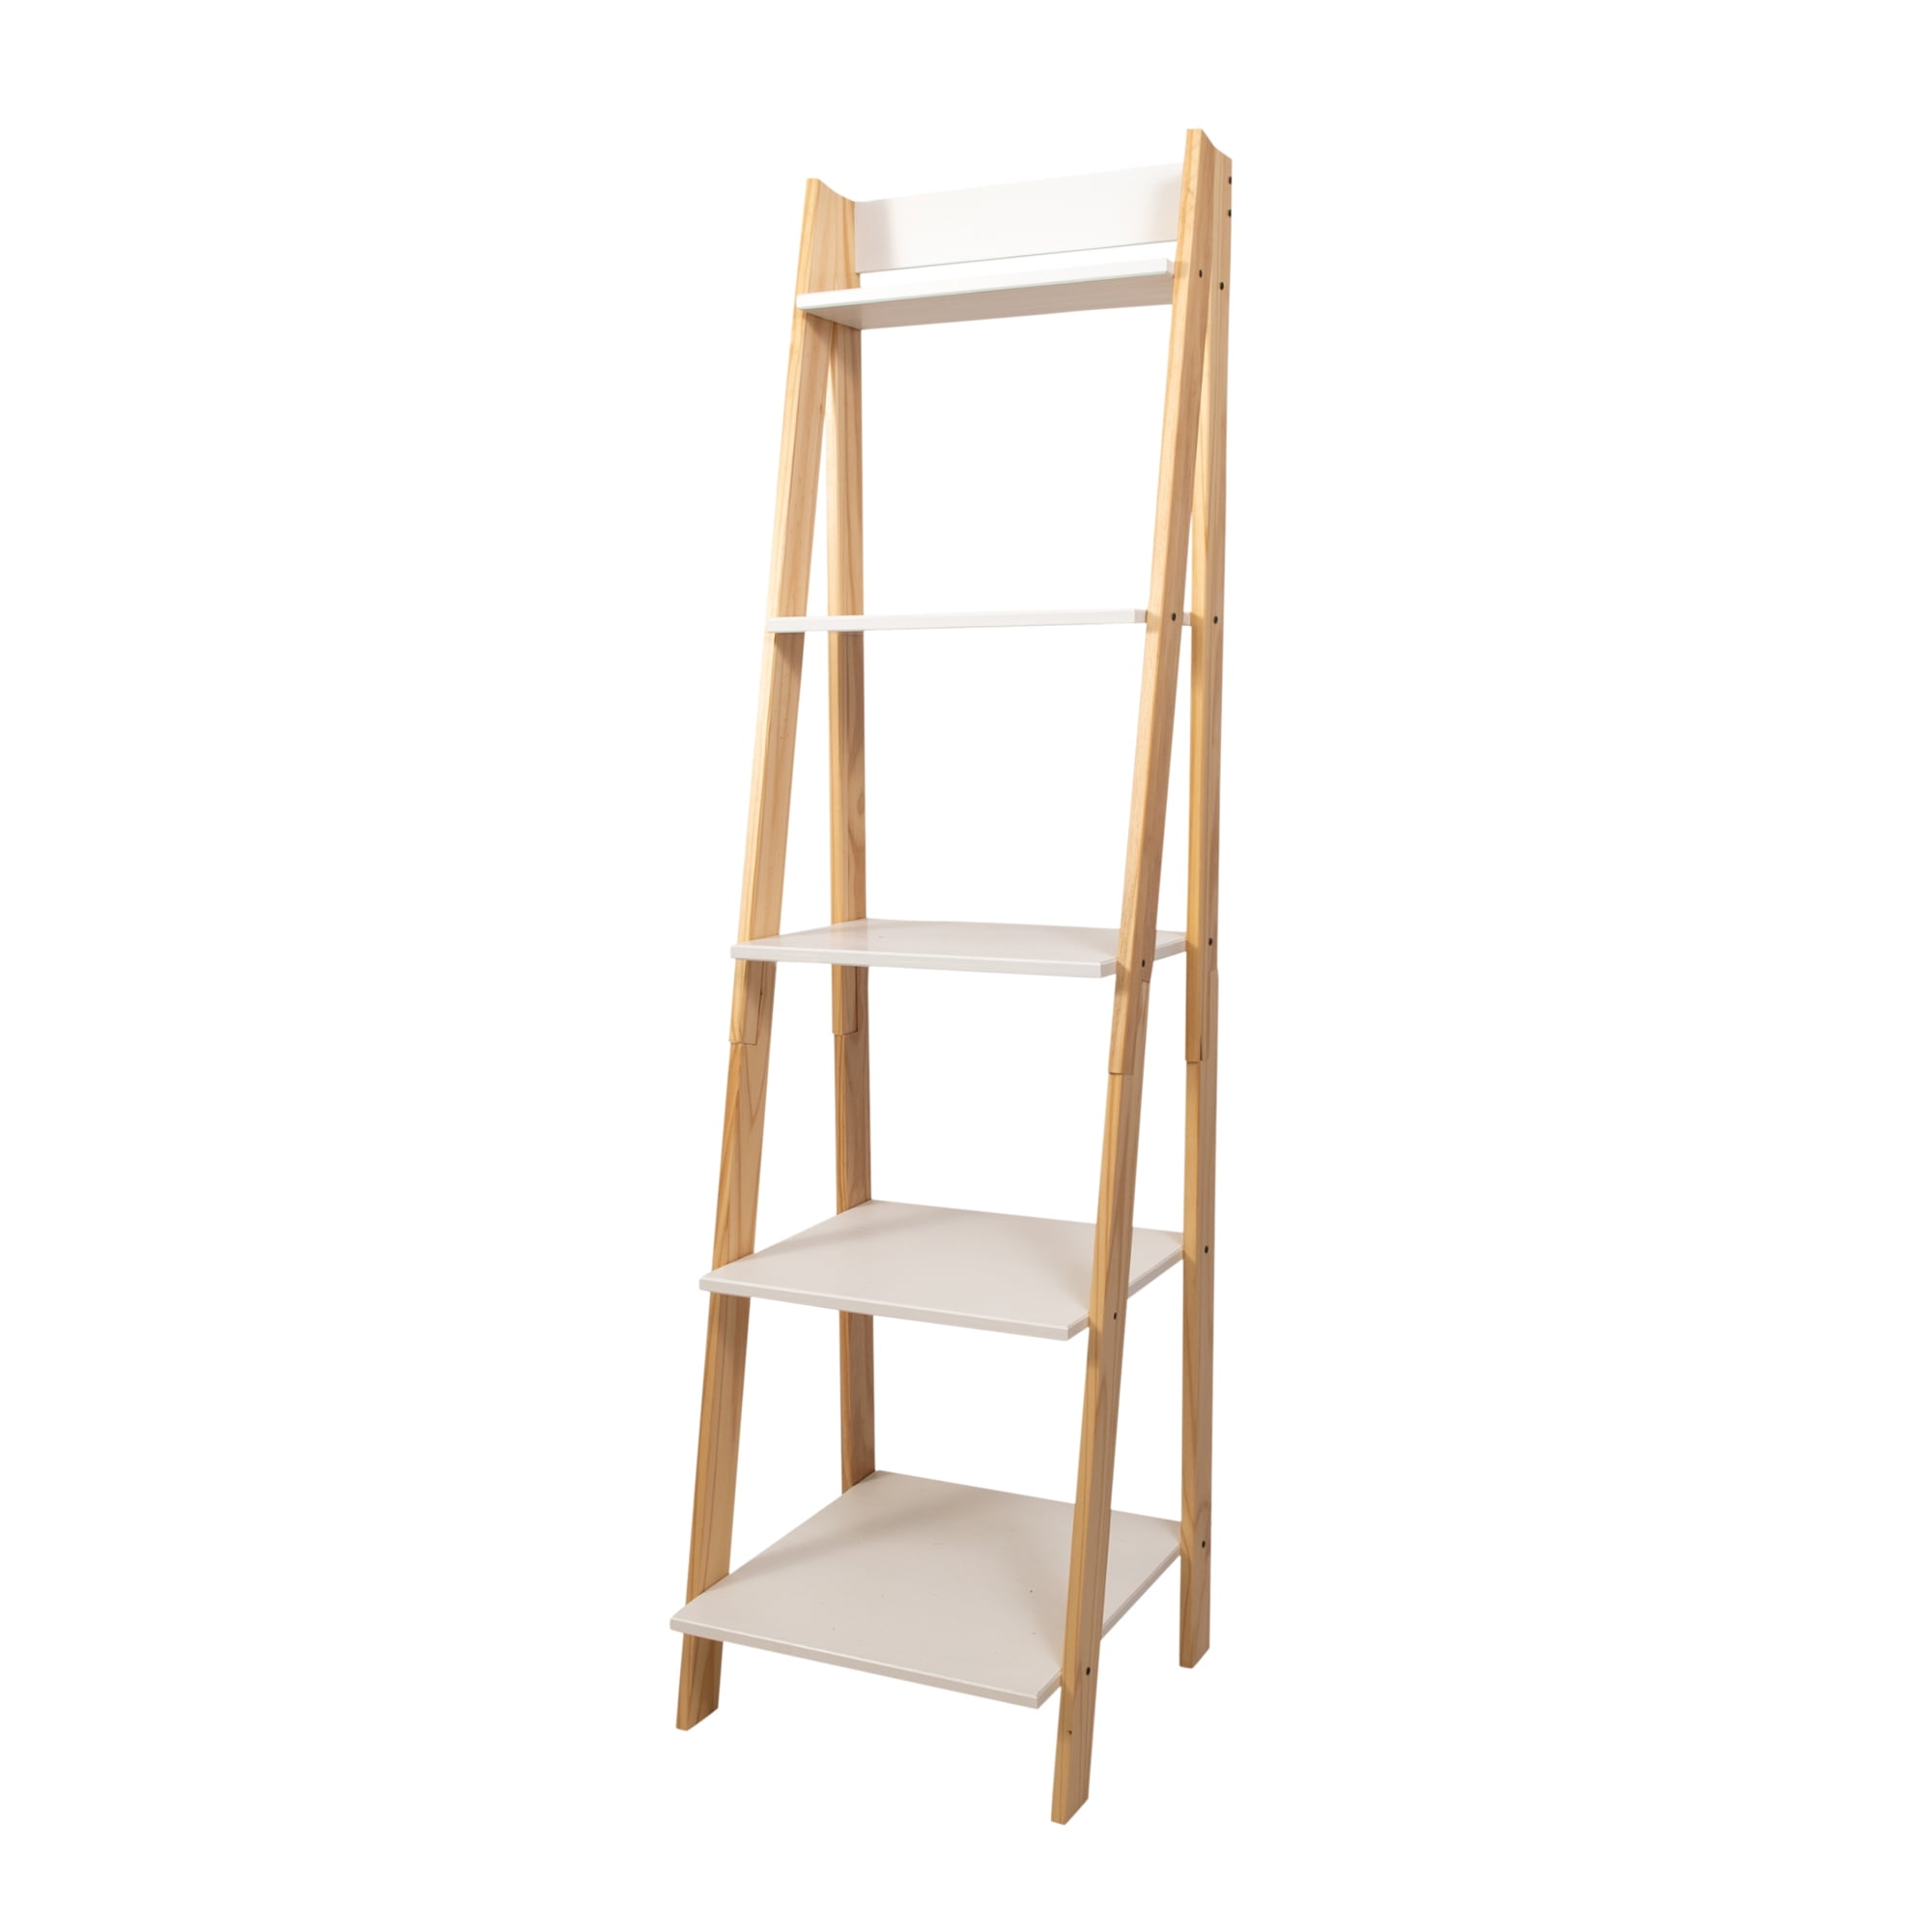 95083 Solid Wood Split 5 Shelf Ladder With Natural Legs, White Shelves